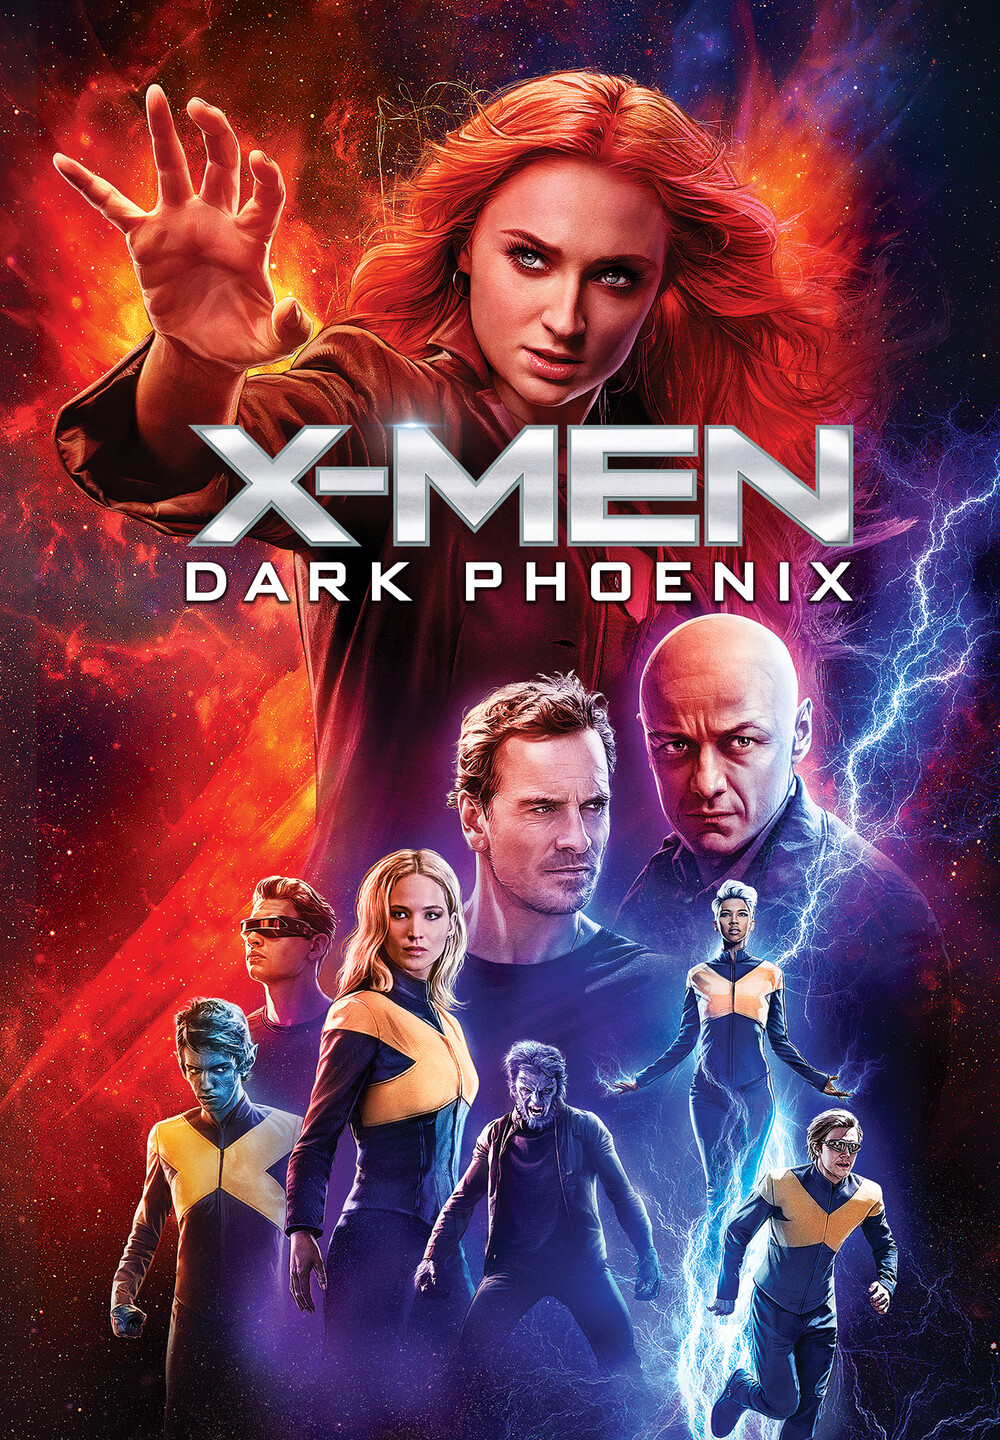 X-Men: Dark Phoenix [HD] (2019)